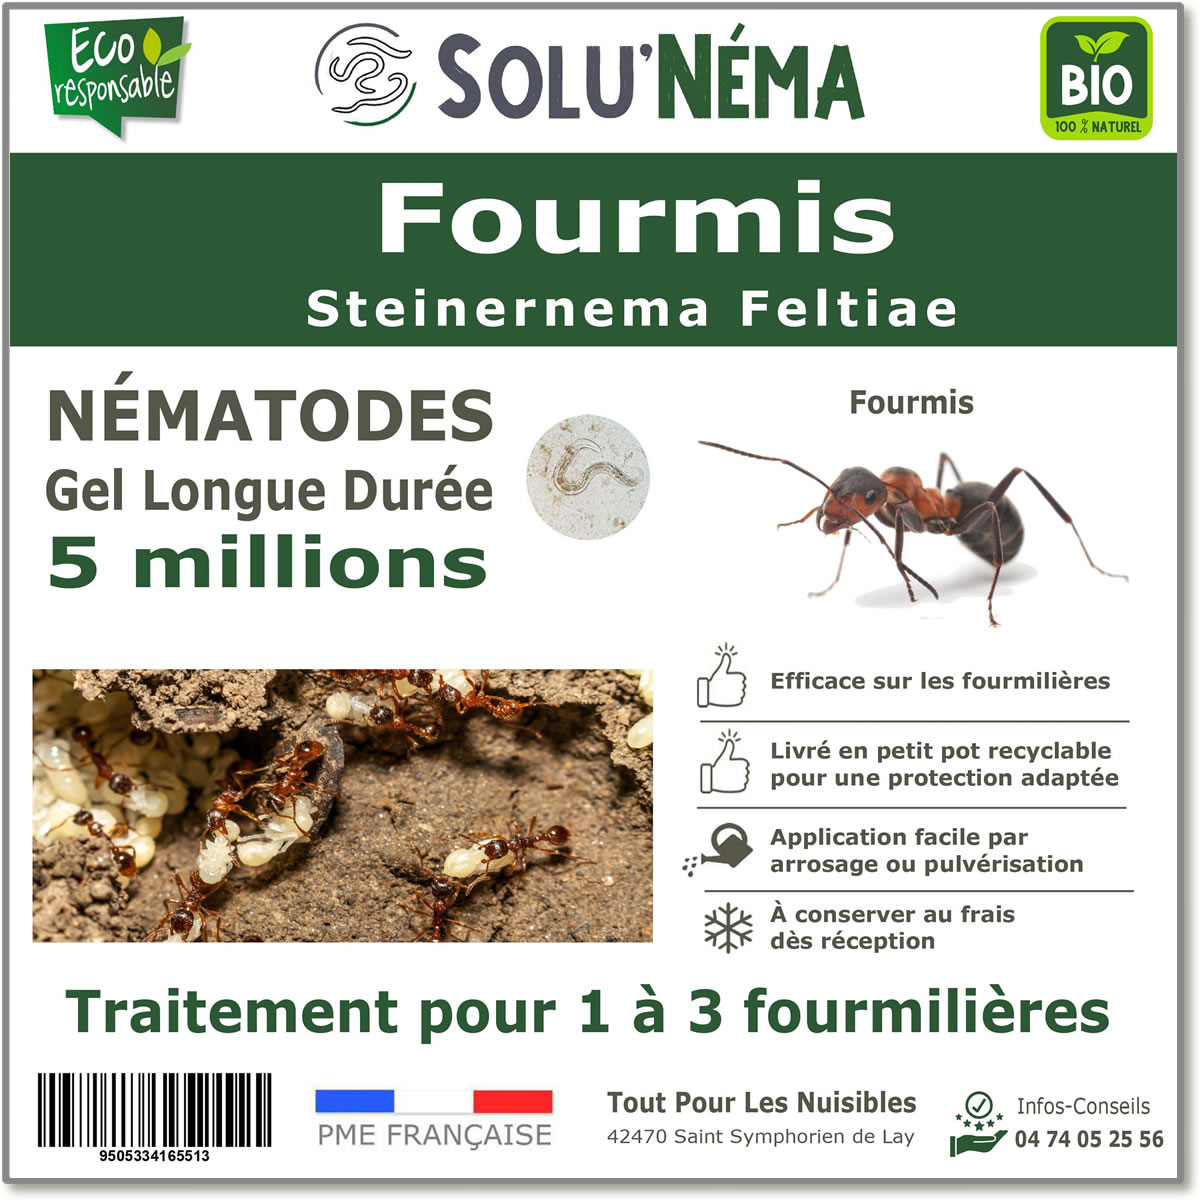 Nematodes ant treatment 5 million